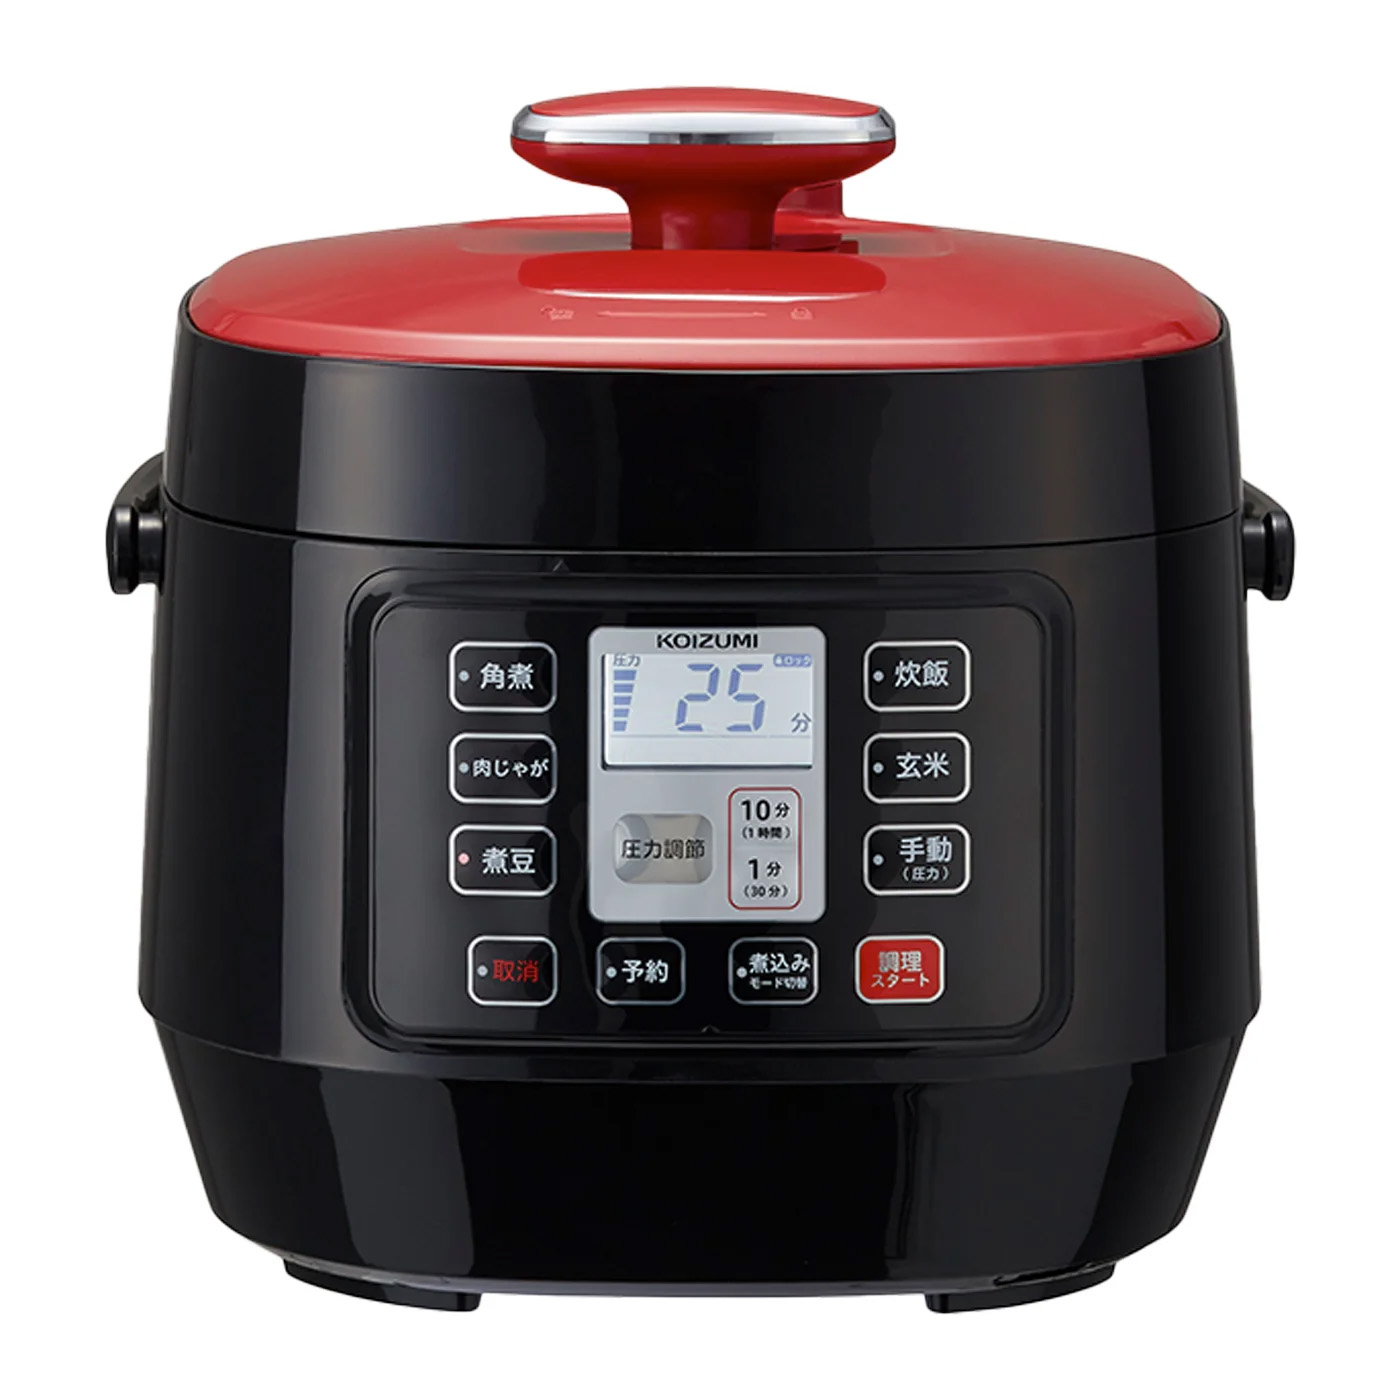 Koizumi Pressure Cooker KSC-350IR